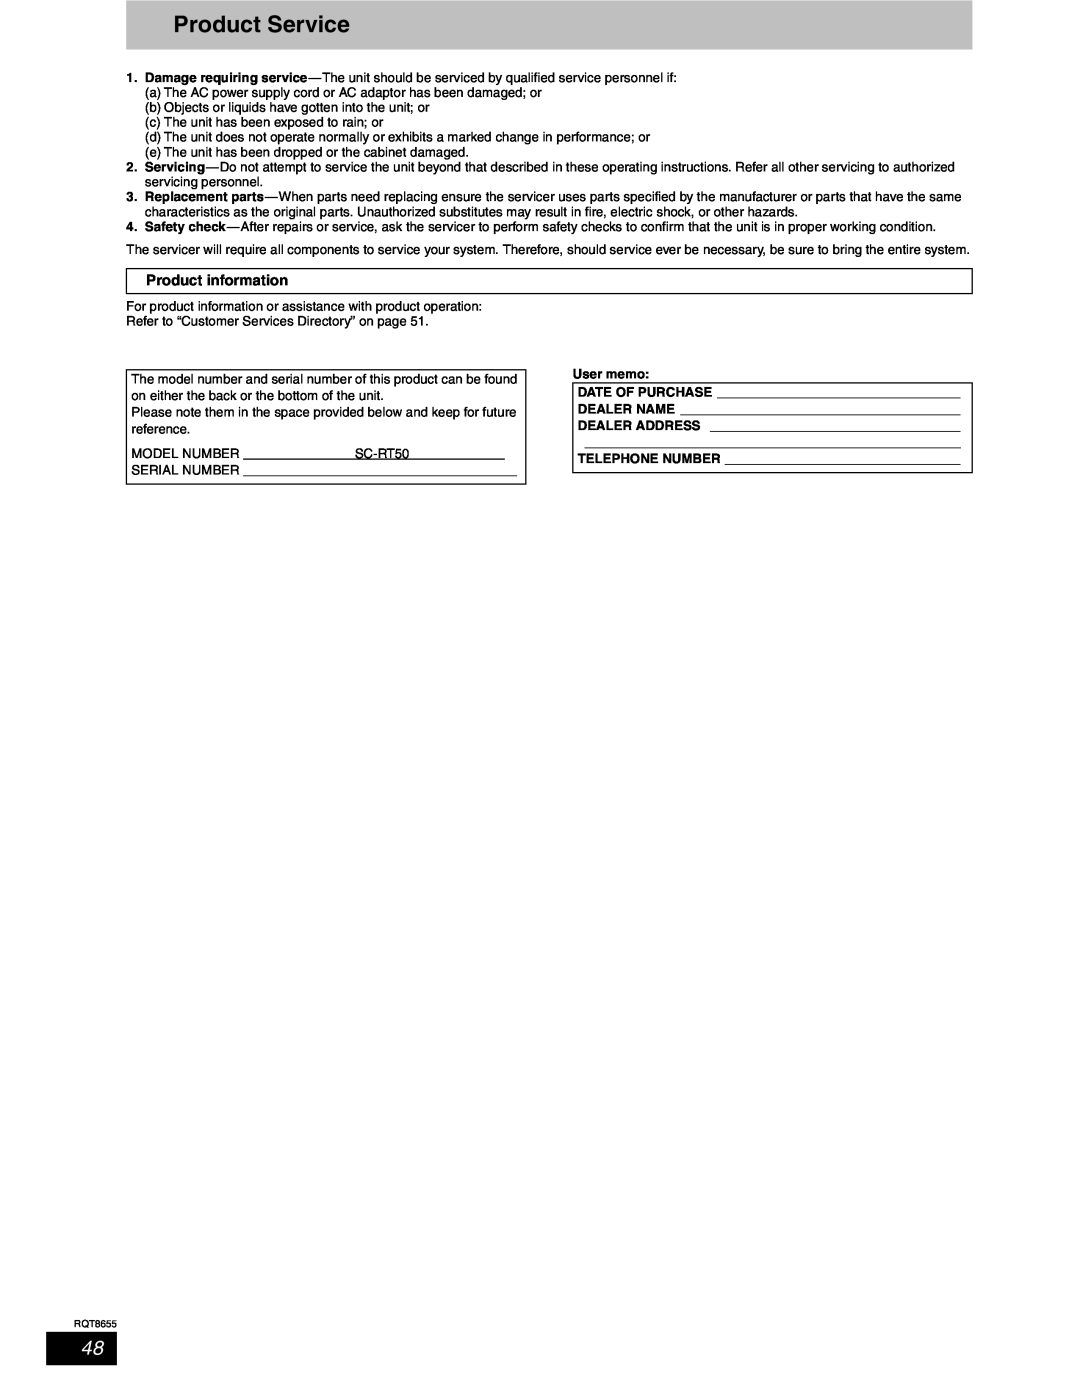 Panasonic SC-RT50 warranty Product Service, Product information 